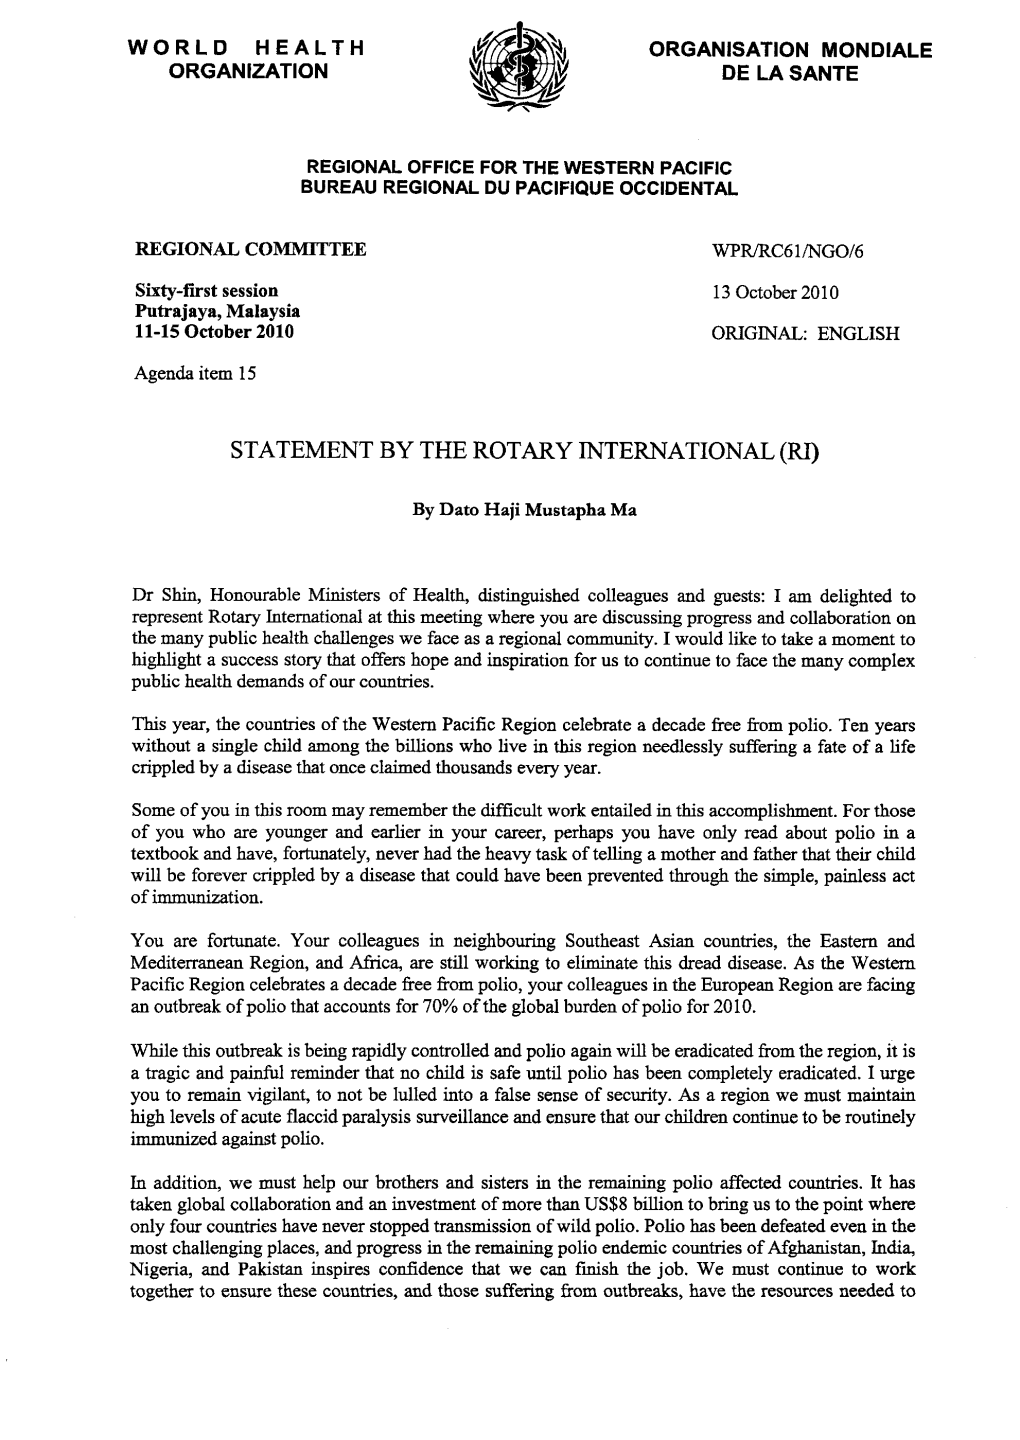 Statement by the Rotary International (Ri)